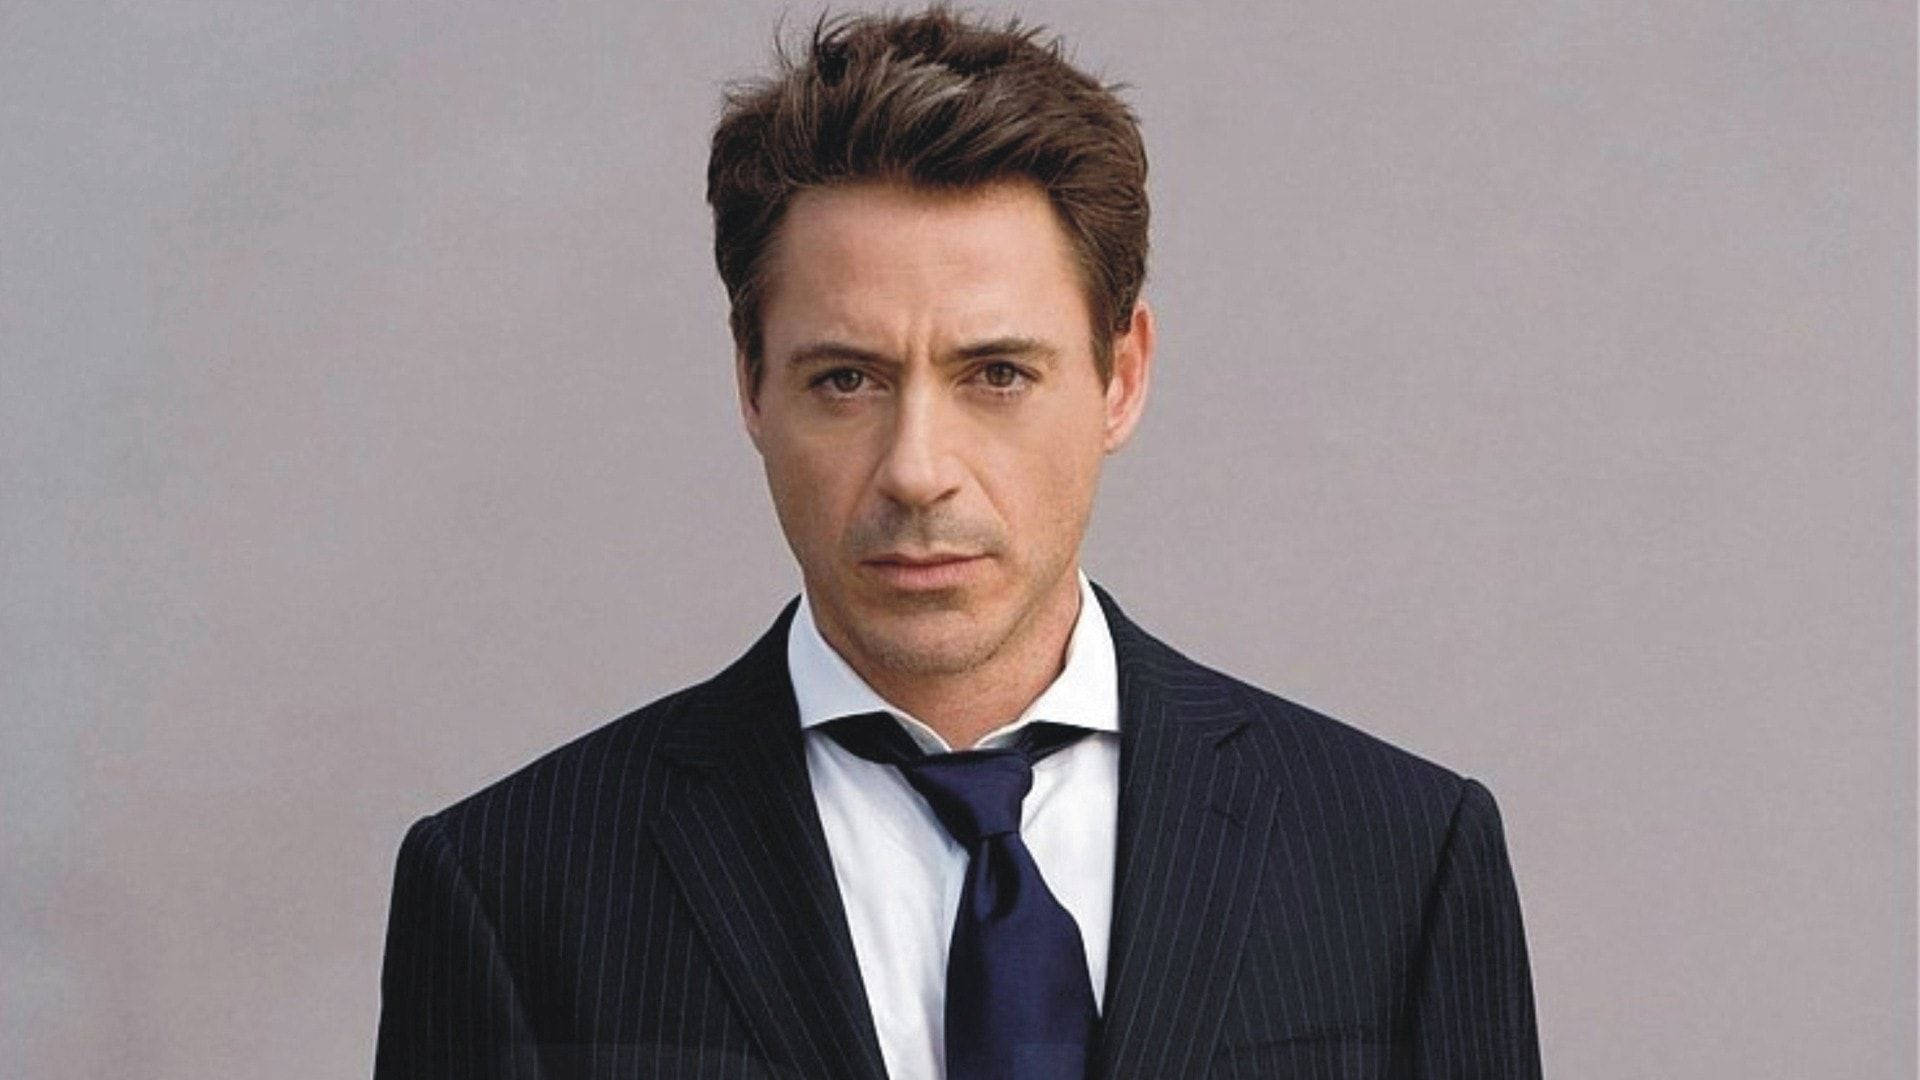 Blue Tie Robert Downey Jr. Wallpaper